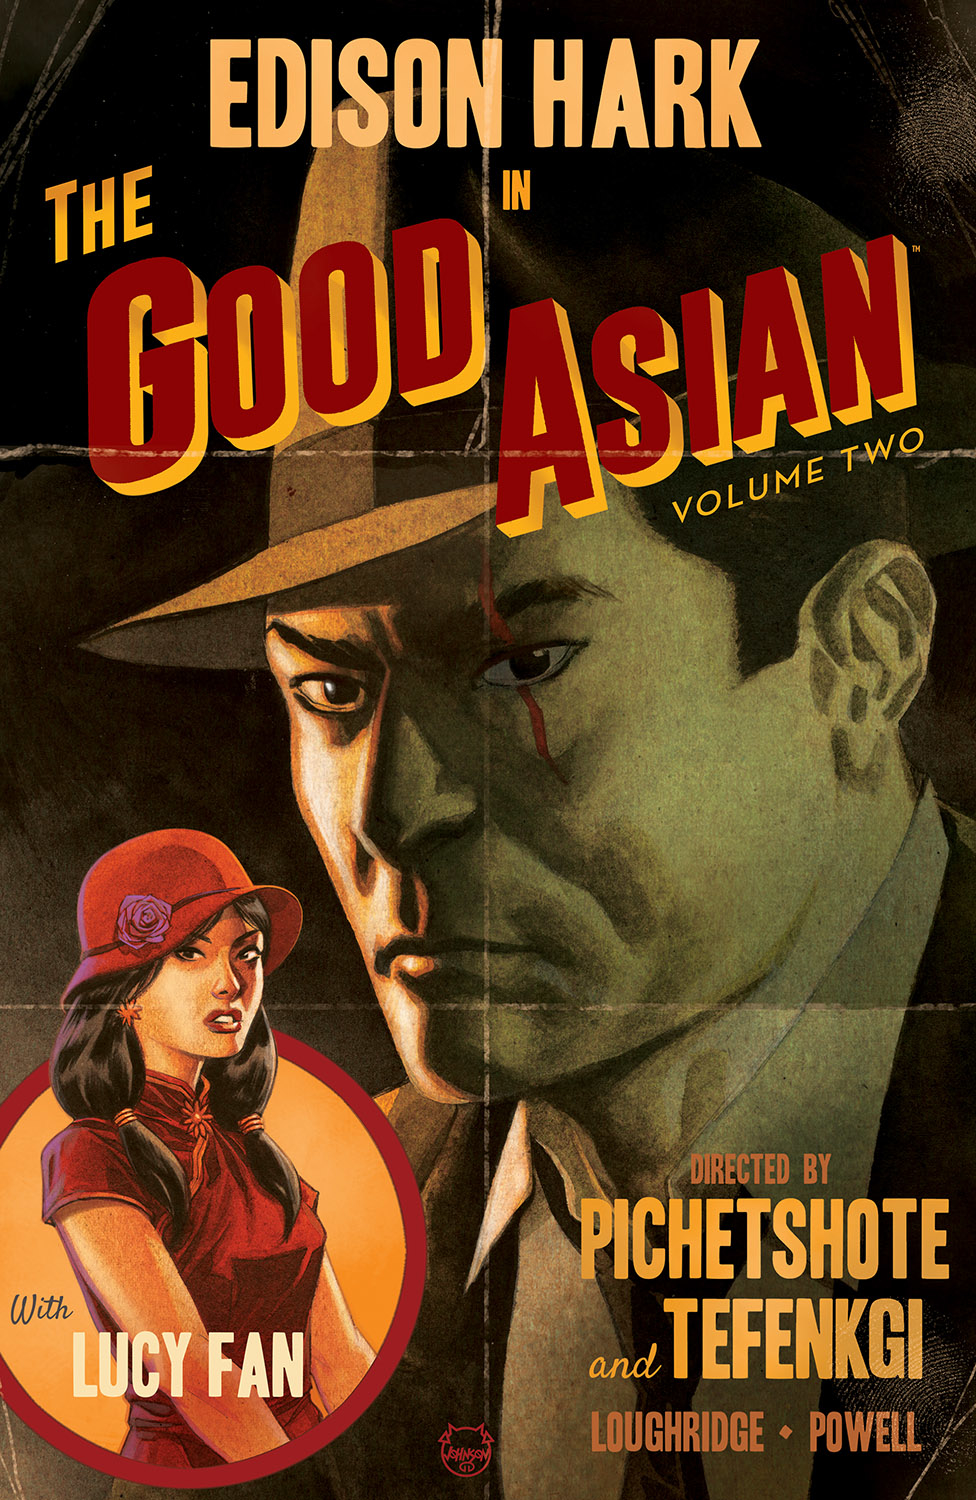 Good Asian Graphic Novel Volume 2 (Mature)